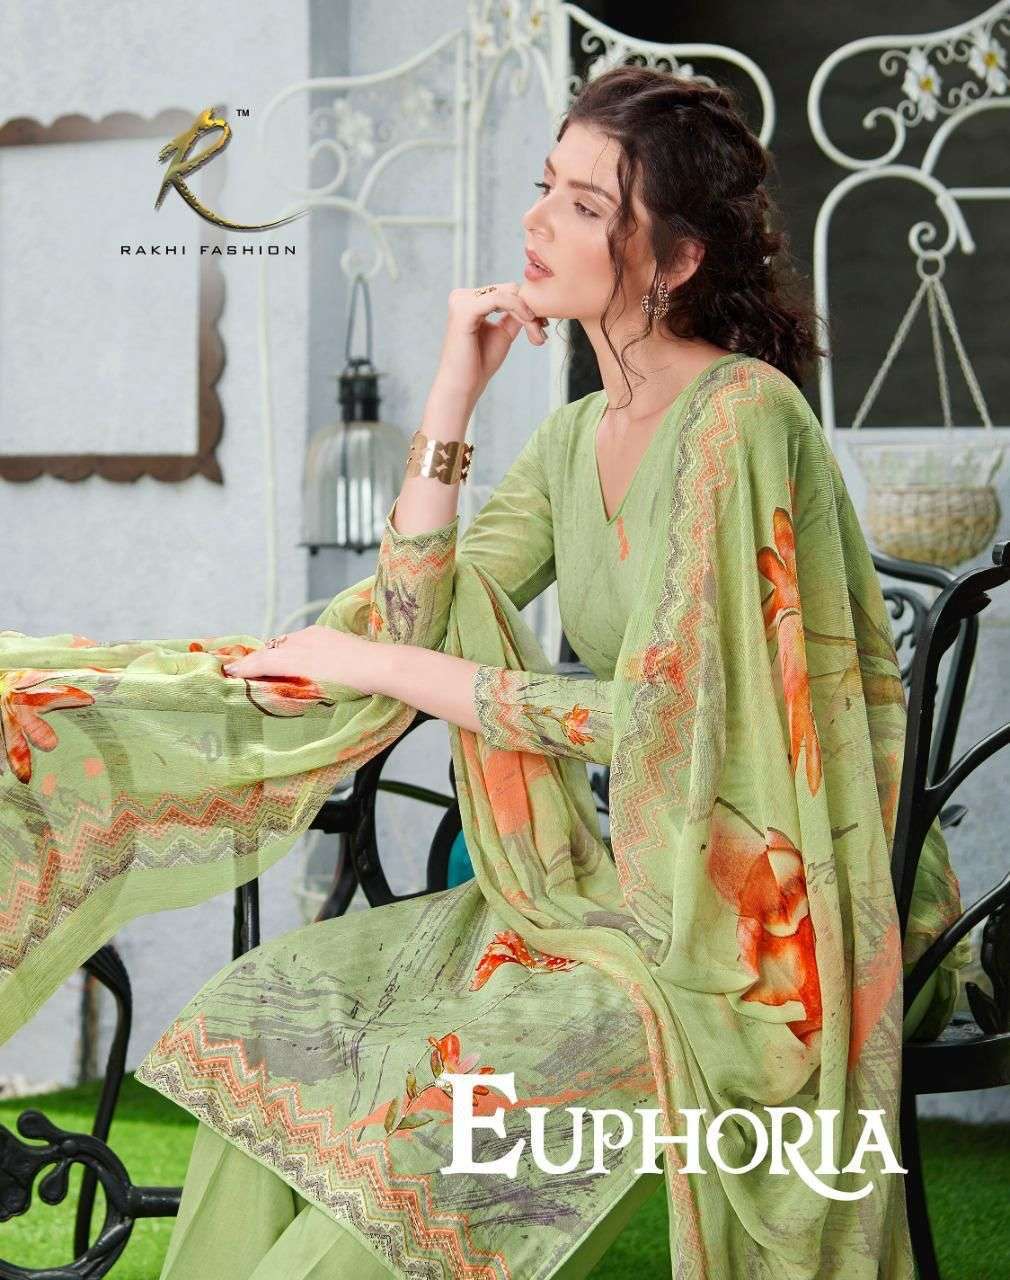 Rakhi Fashion Euphoria Glace Cotton Digital Print With Handw...